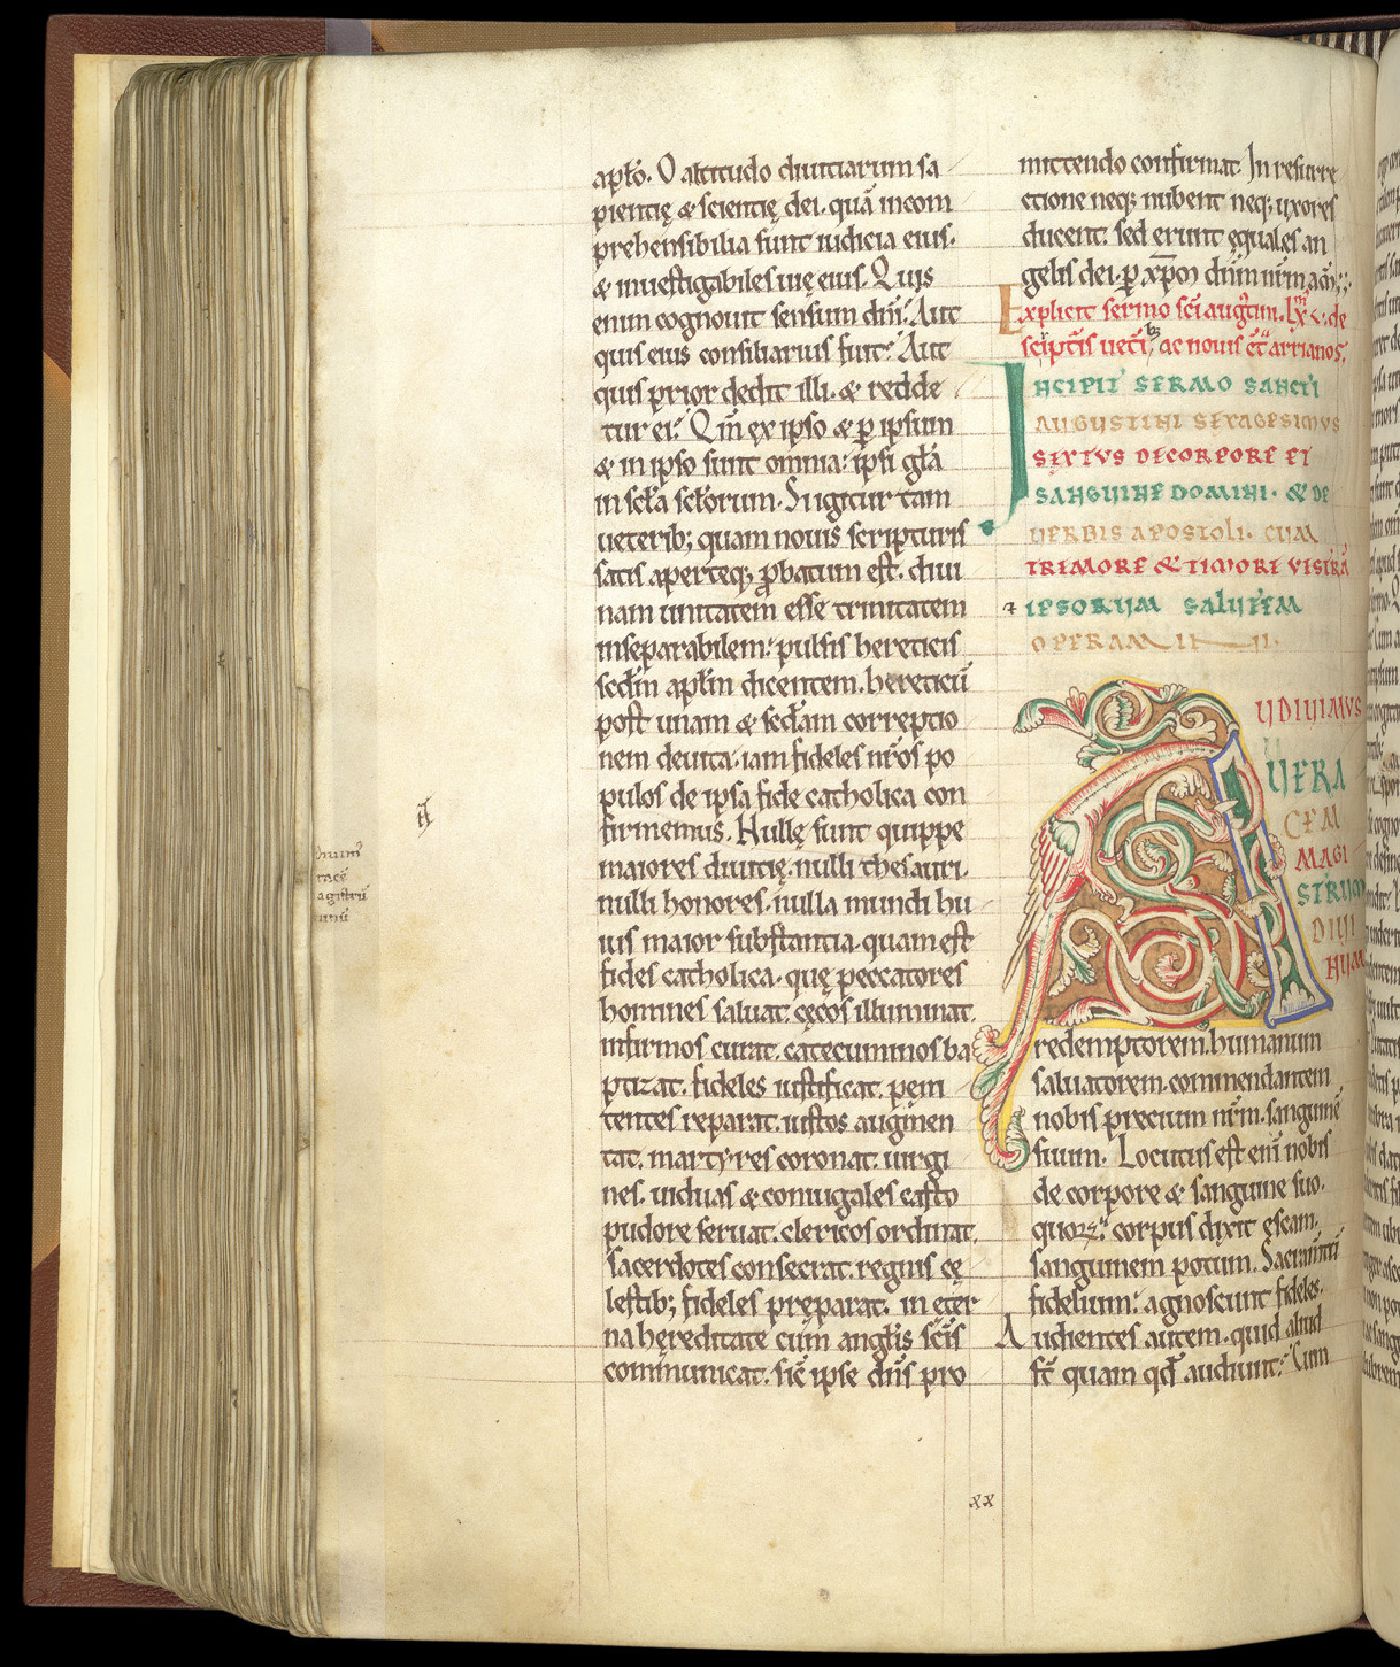 Illuminated manuscript from the British Library